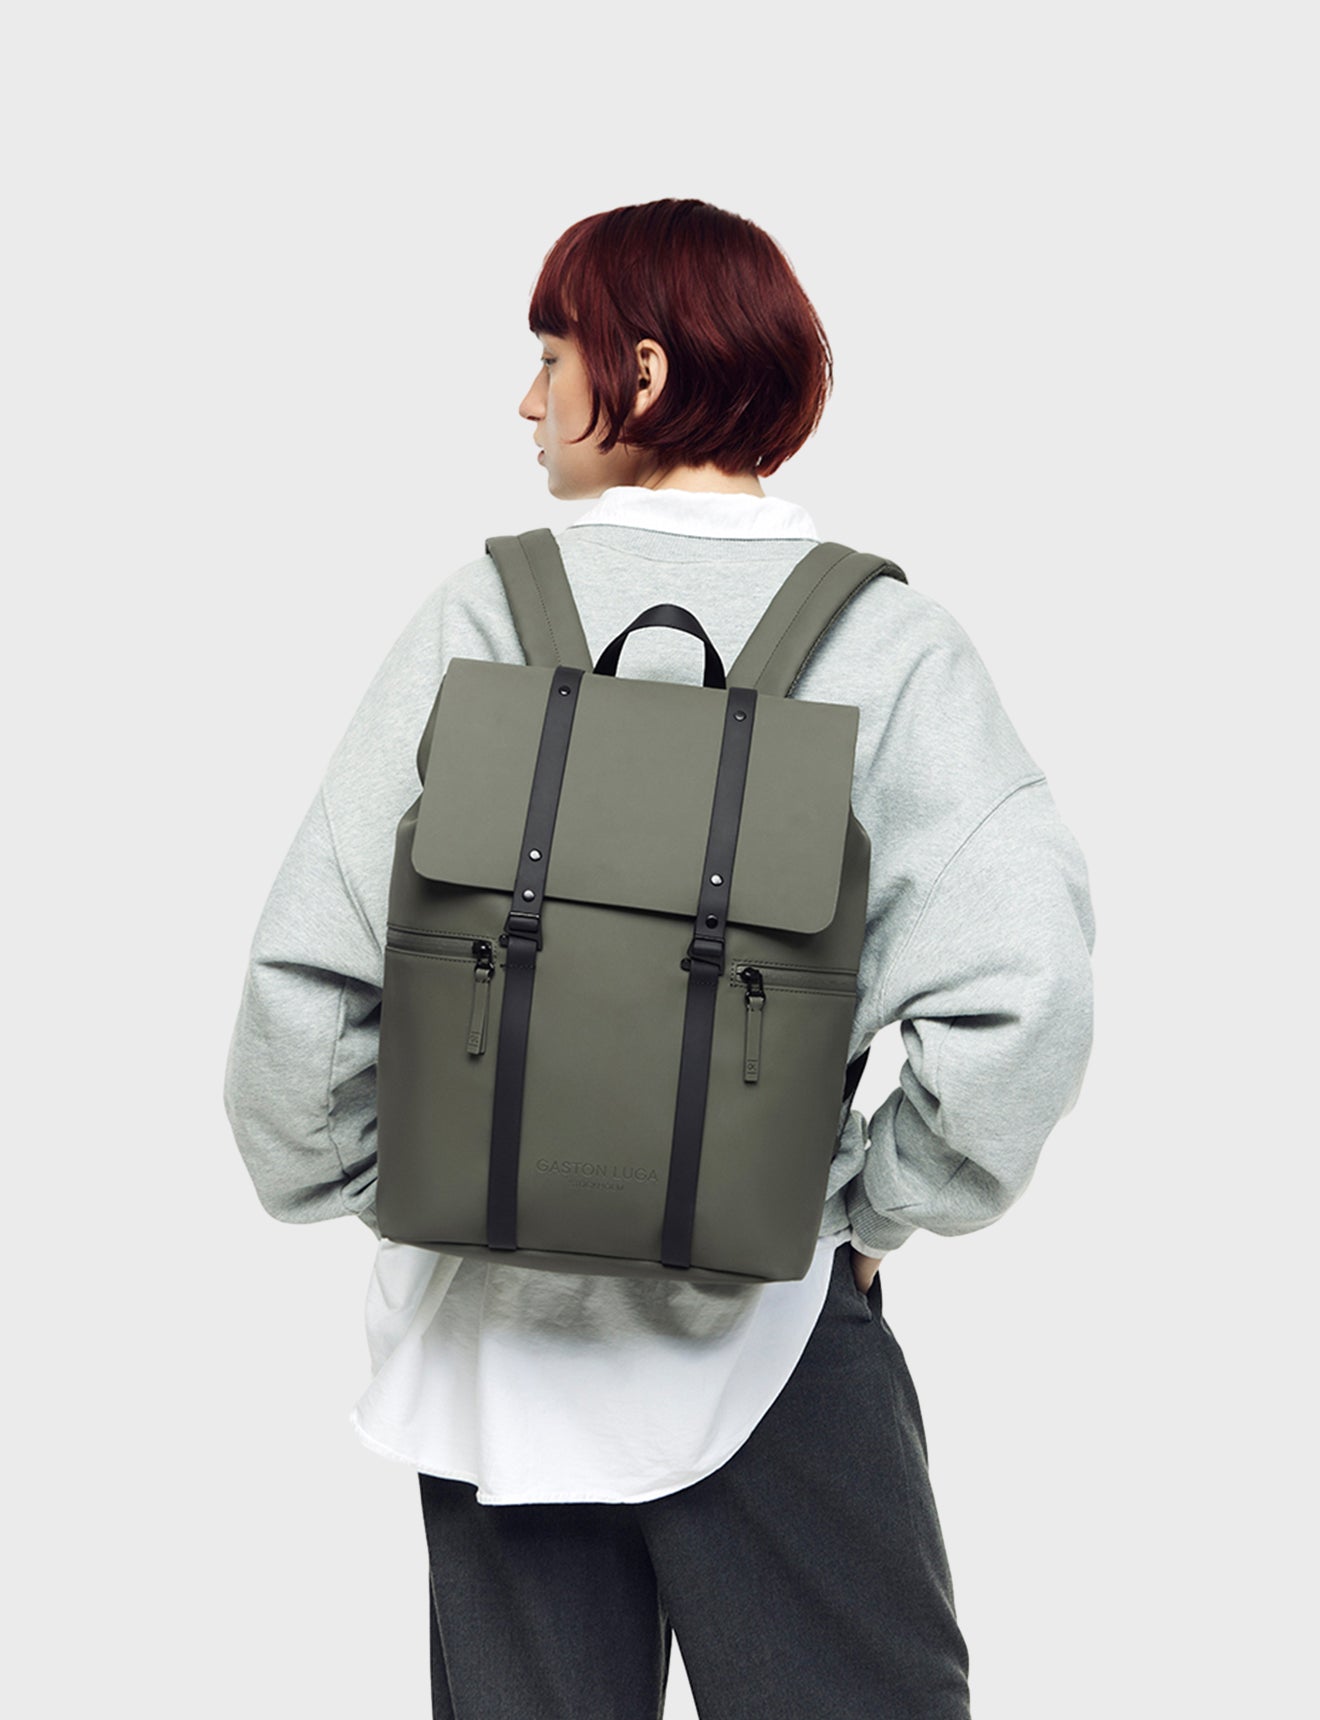 Gaston Luga - Splash 2.0- 13" Eco-Friendly Waterproof Backpack 14.25L - Olive